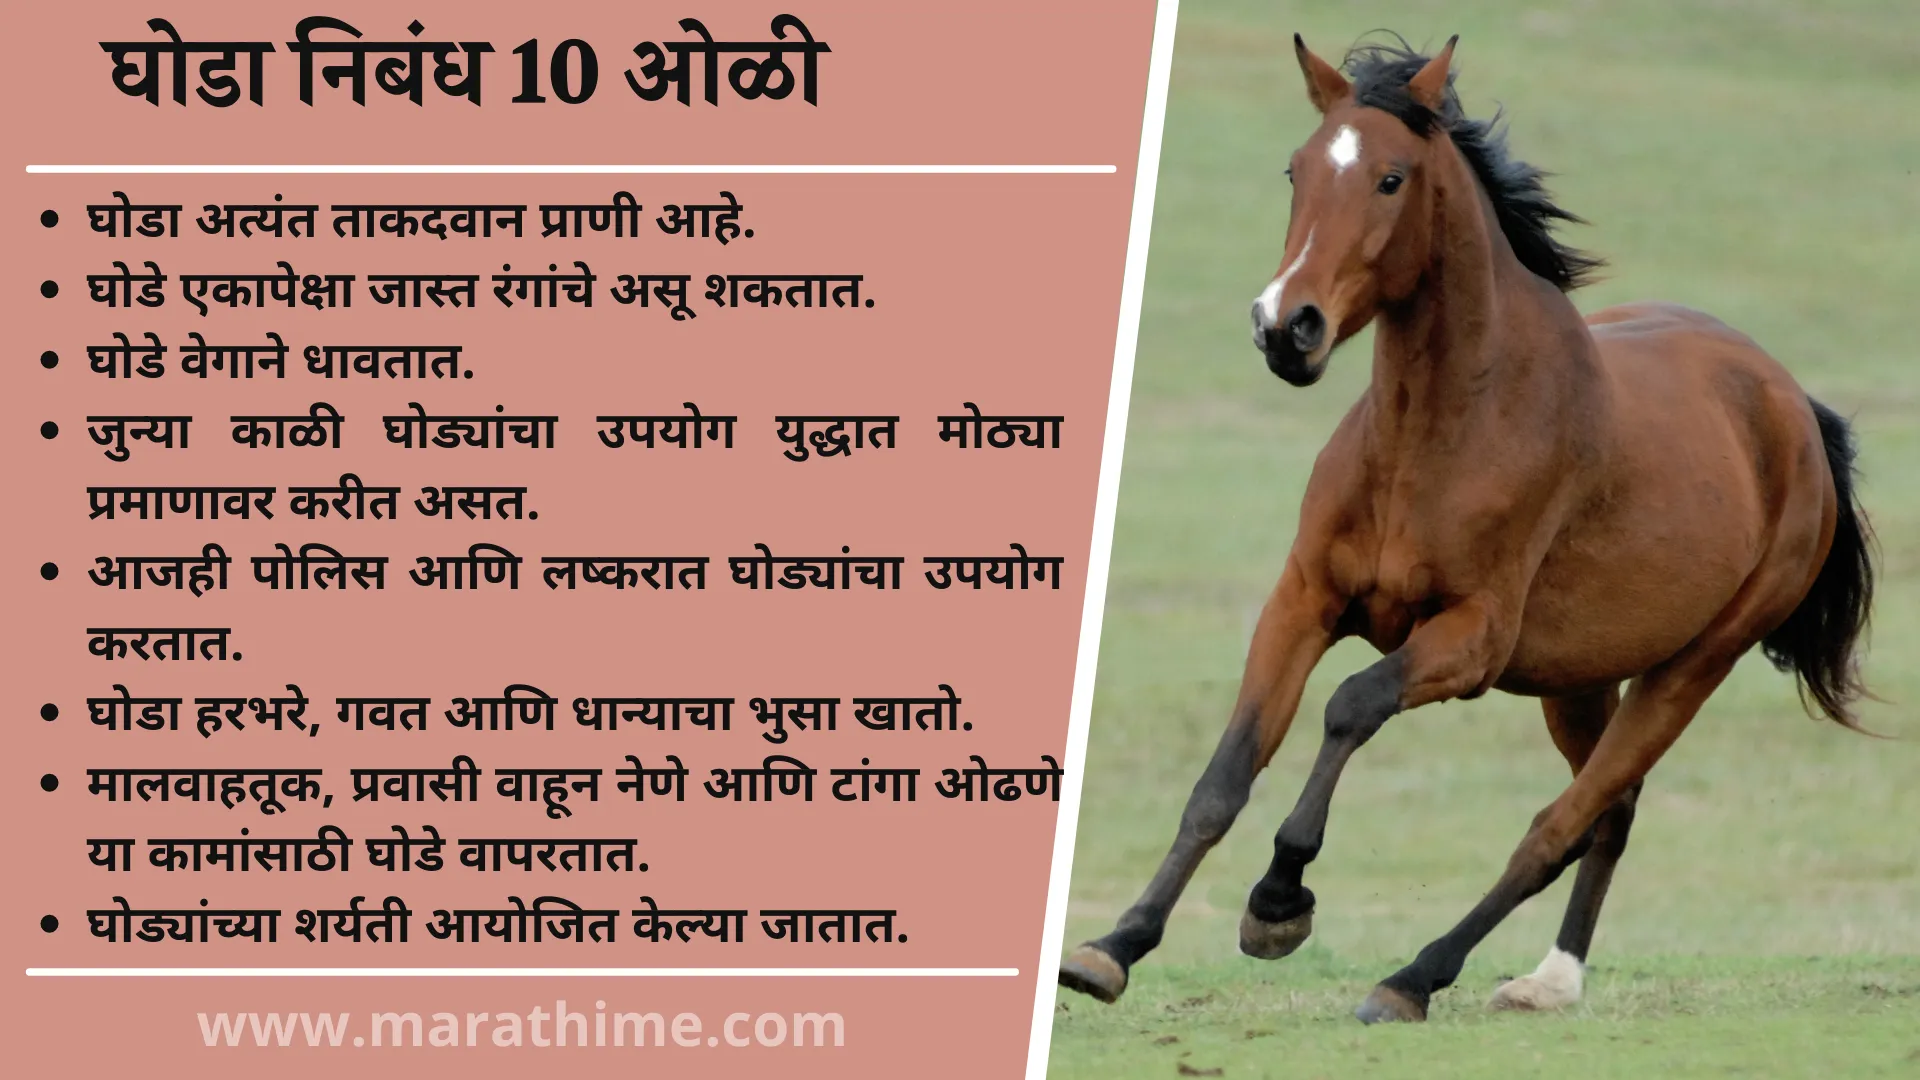 घोडा निबंध 10 ओळी, 10 Lines On Horse in Marathi